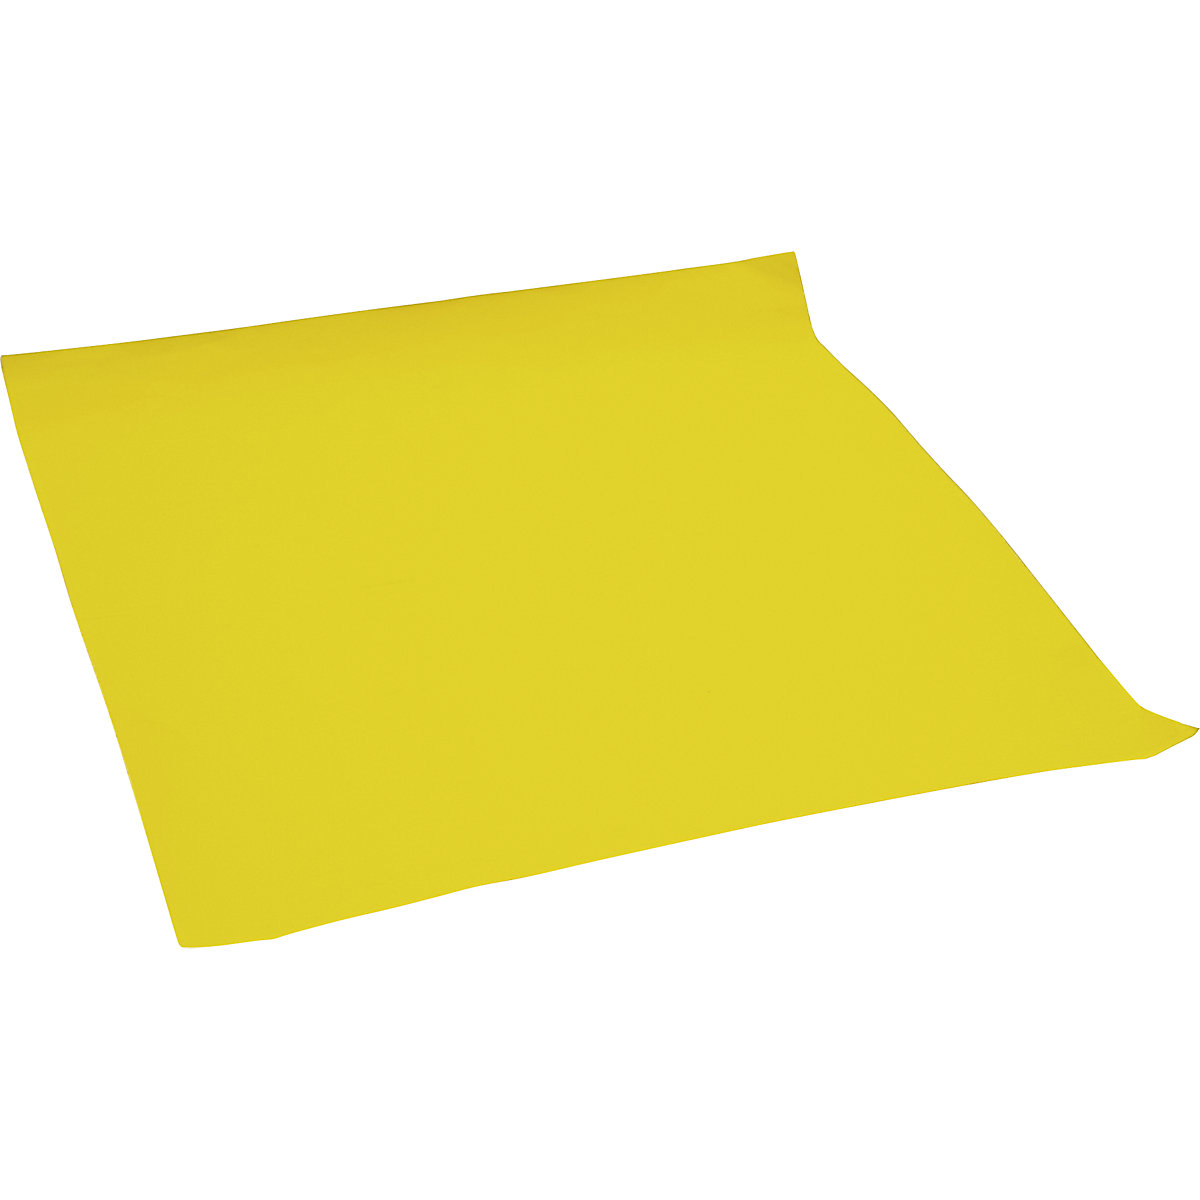 Single use sealing mat, PU coating, yellow, LxW 700 x 700 mm, 1 mat